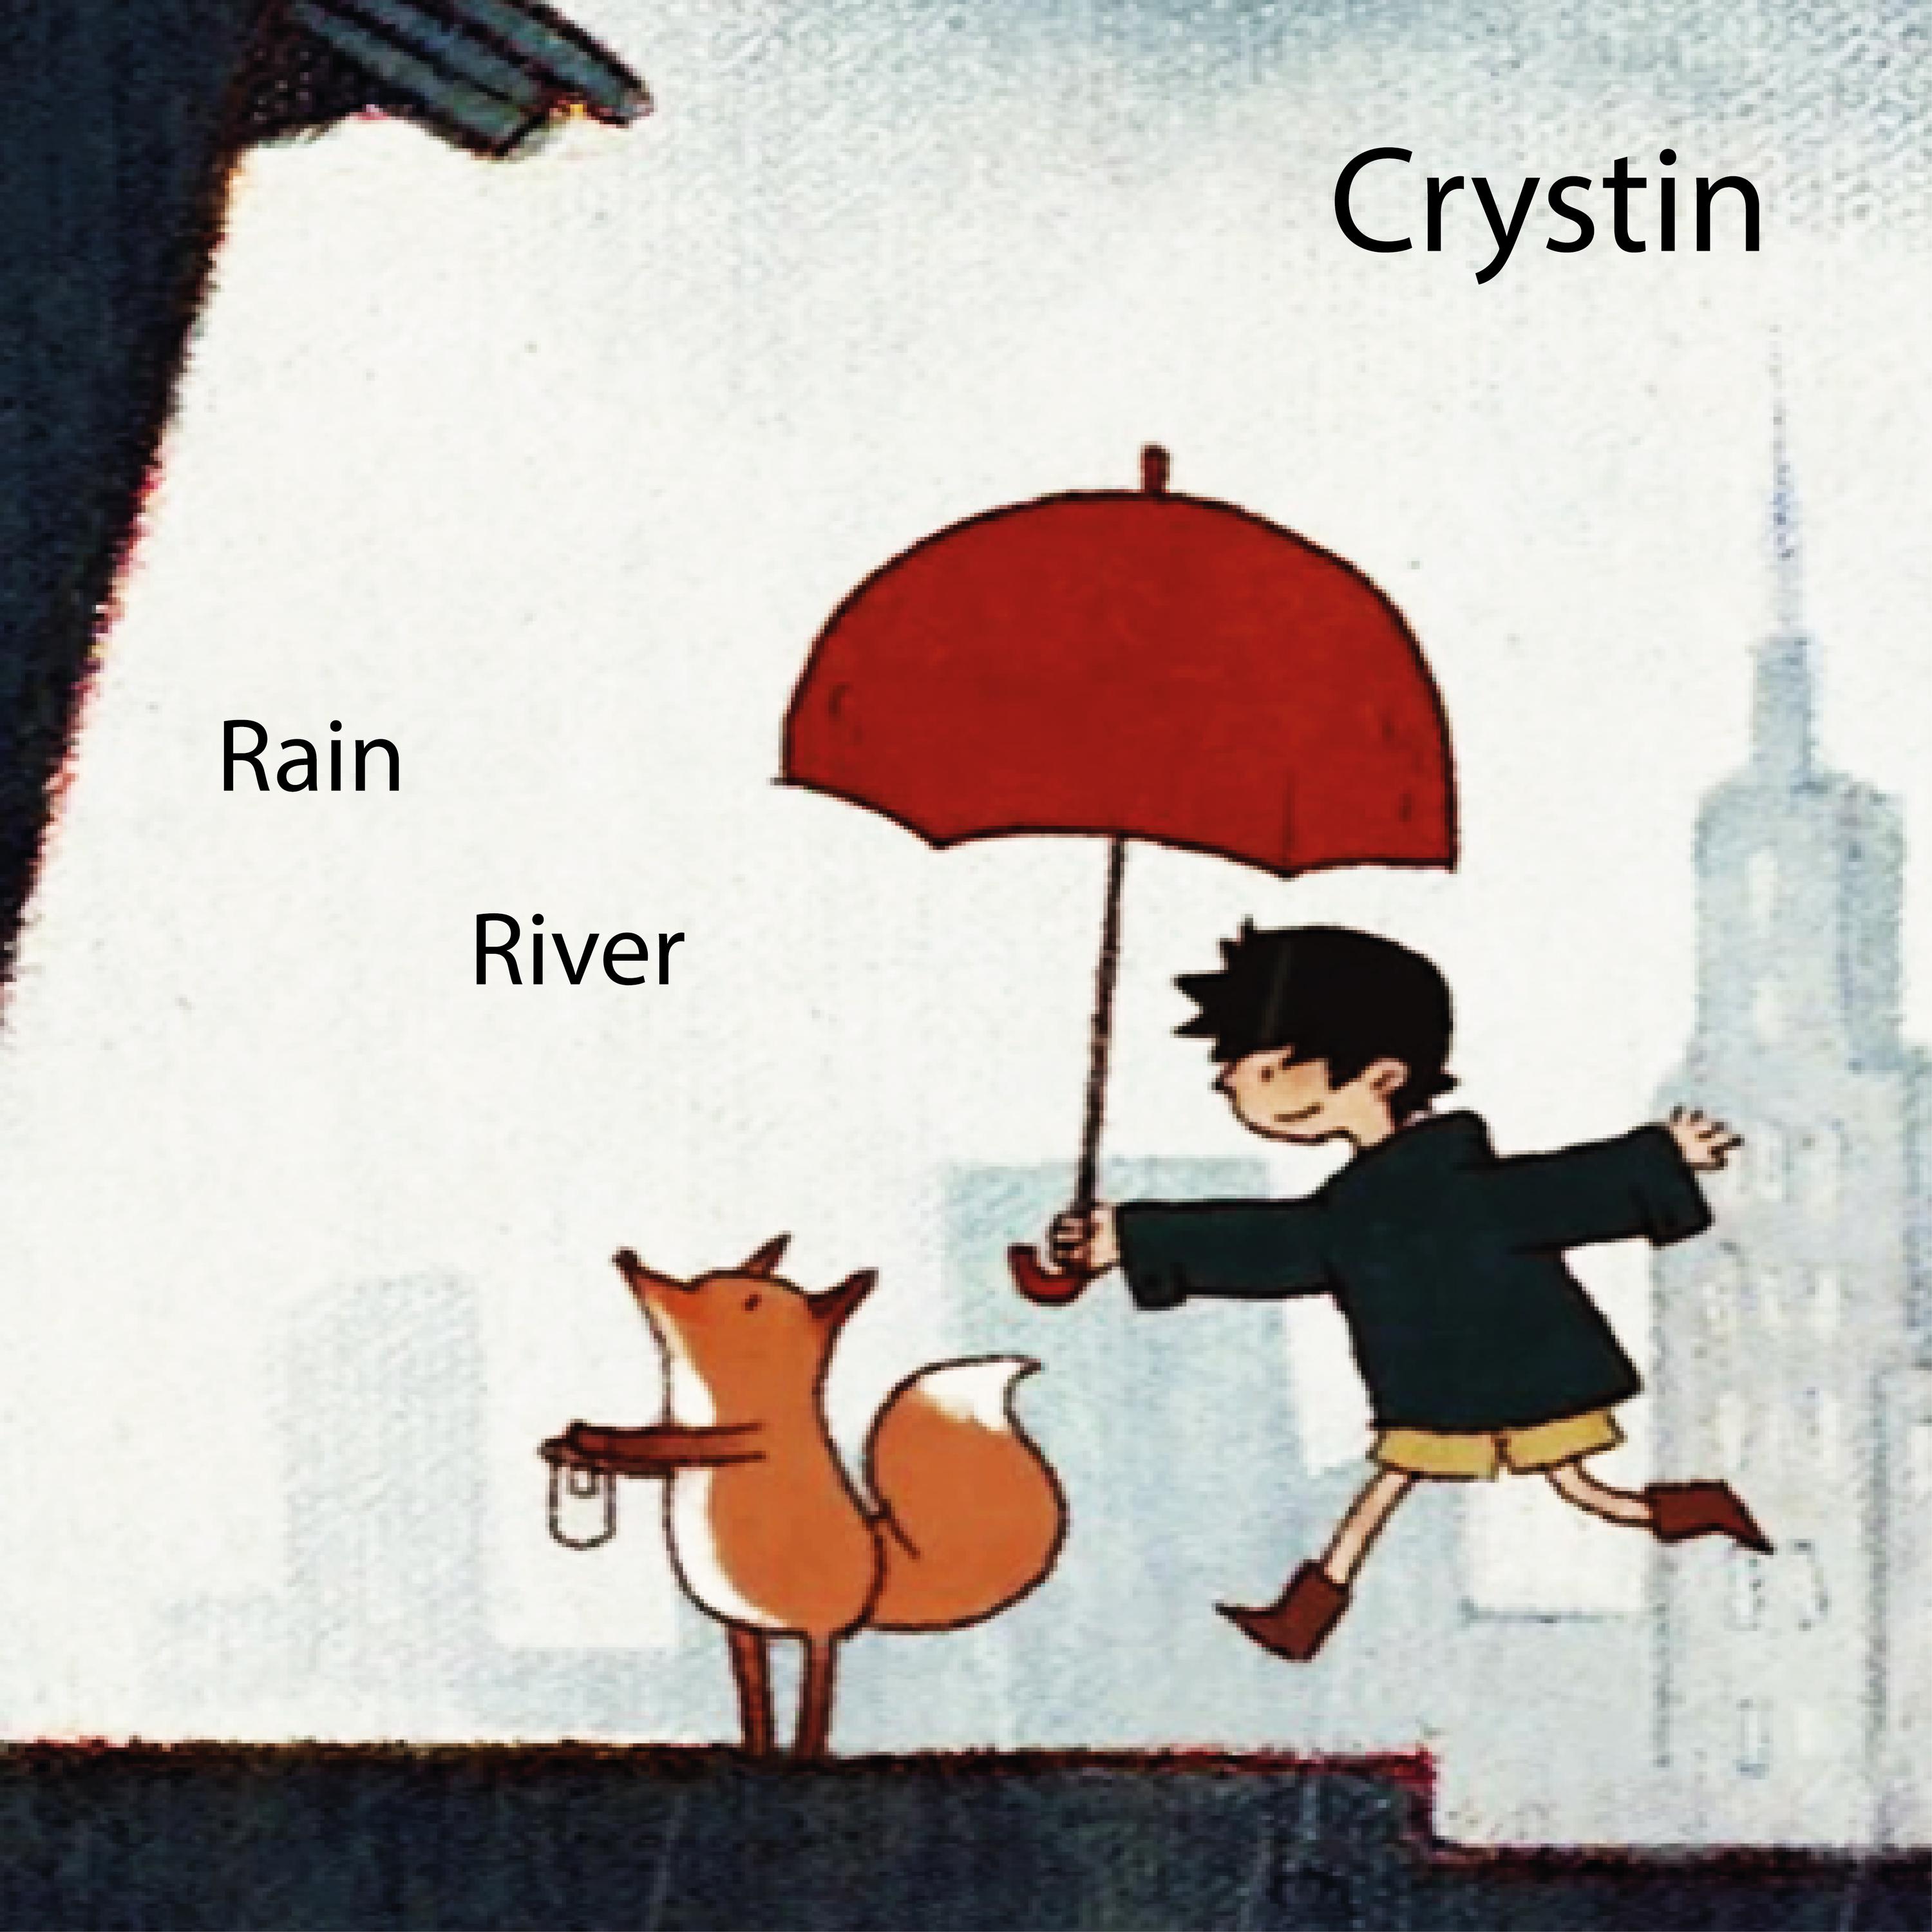 Raining rivers. Crystin.